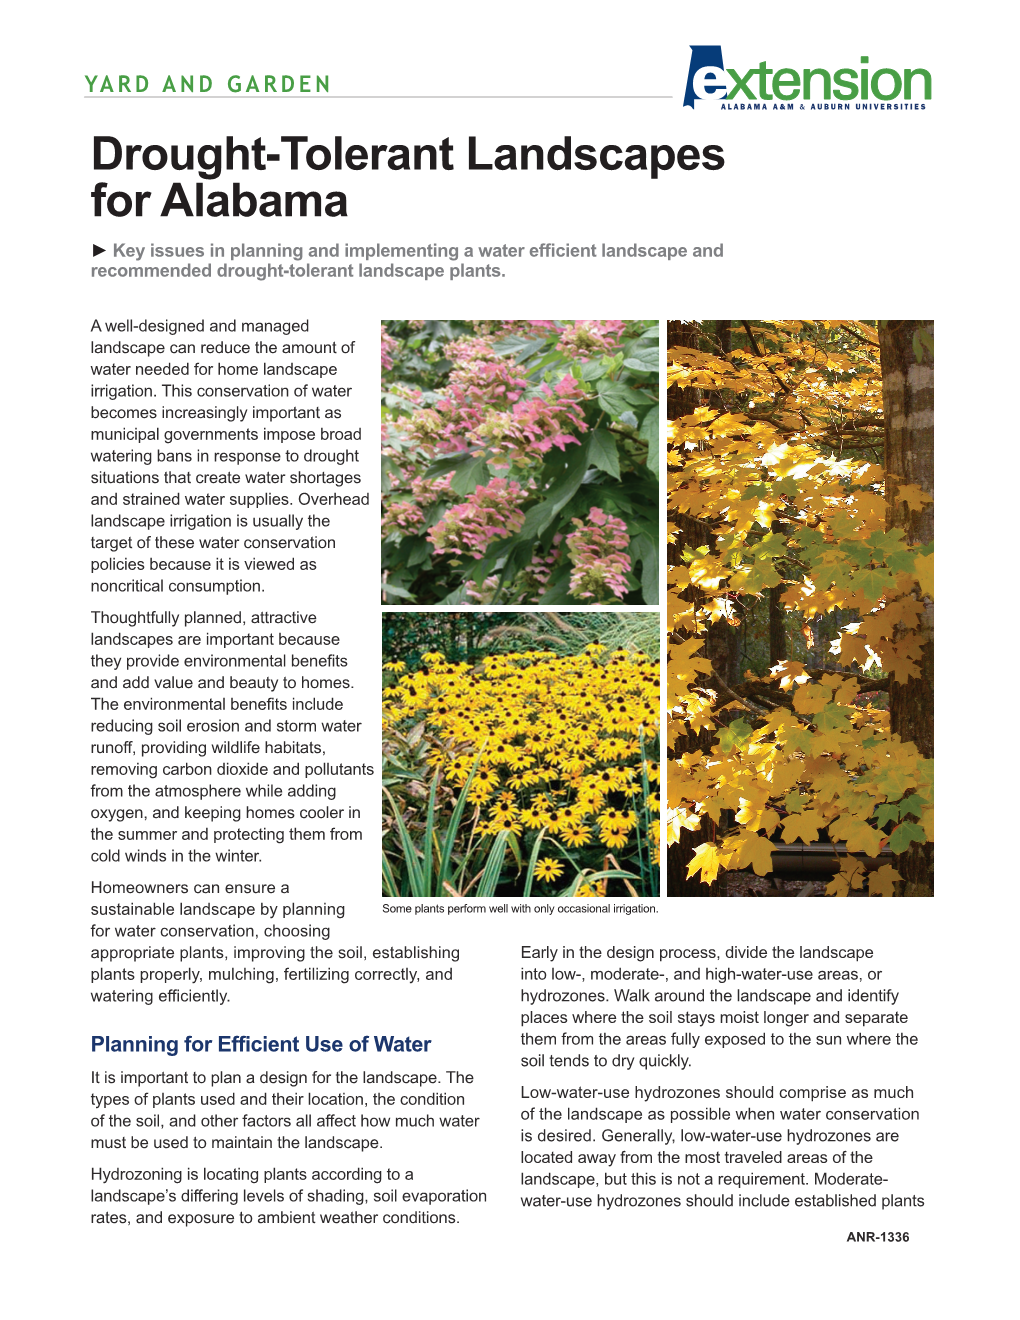 Download a PDF of Drought-Tolerant Landscapes for Alabama, ANR